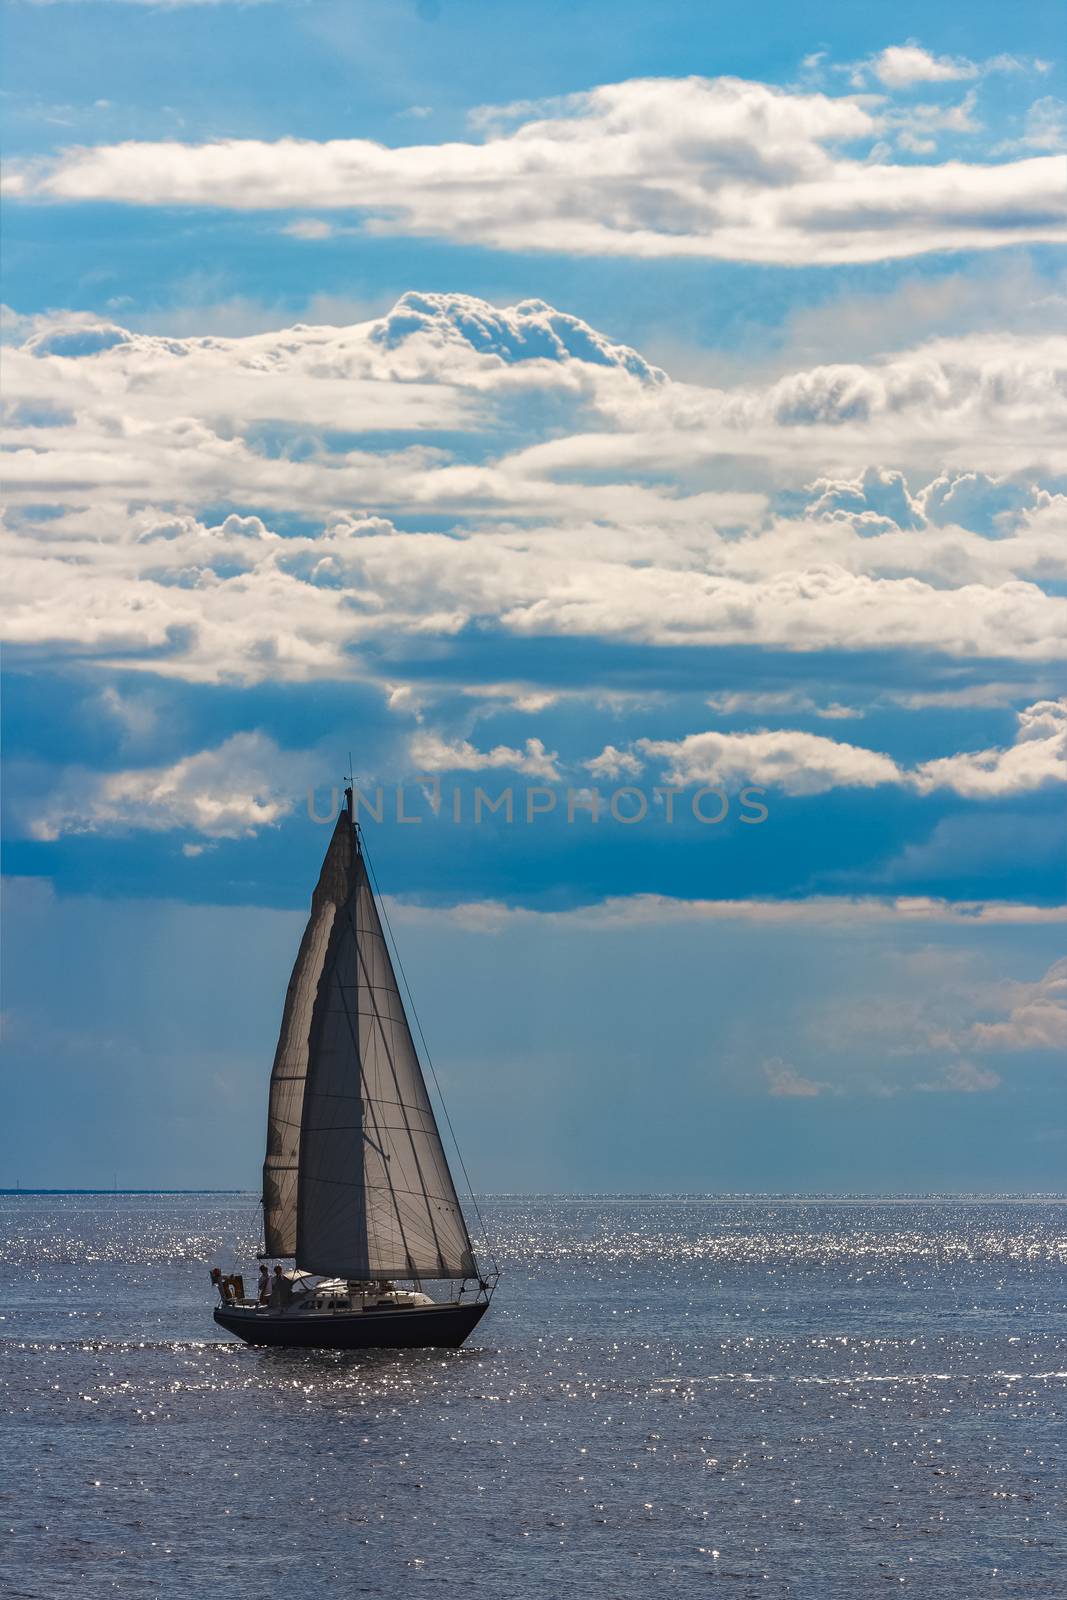 Blue sailboat at journey by sengnsp